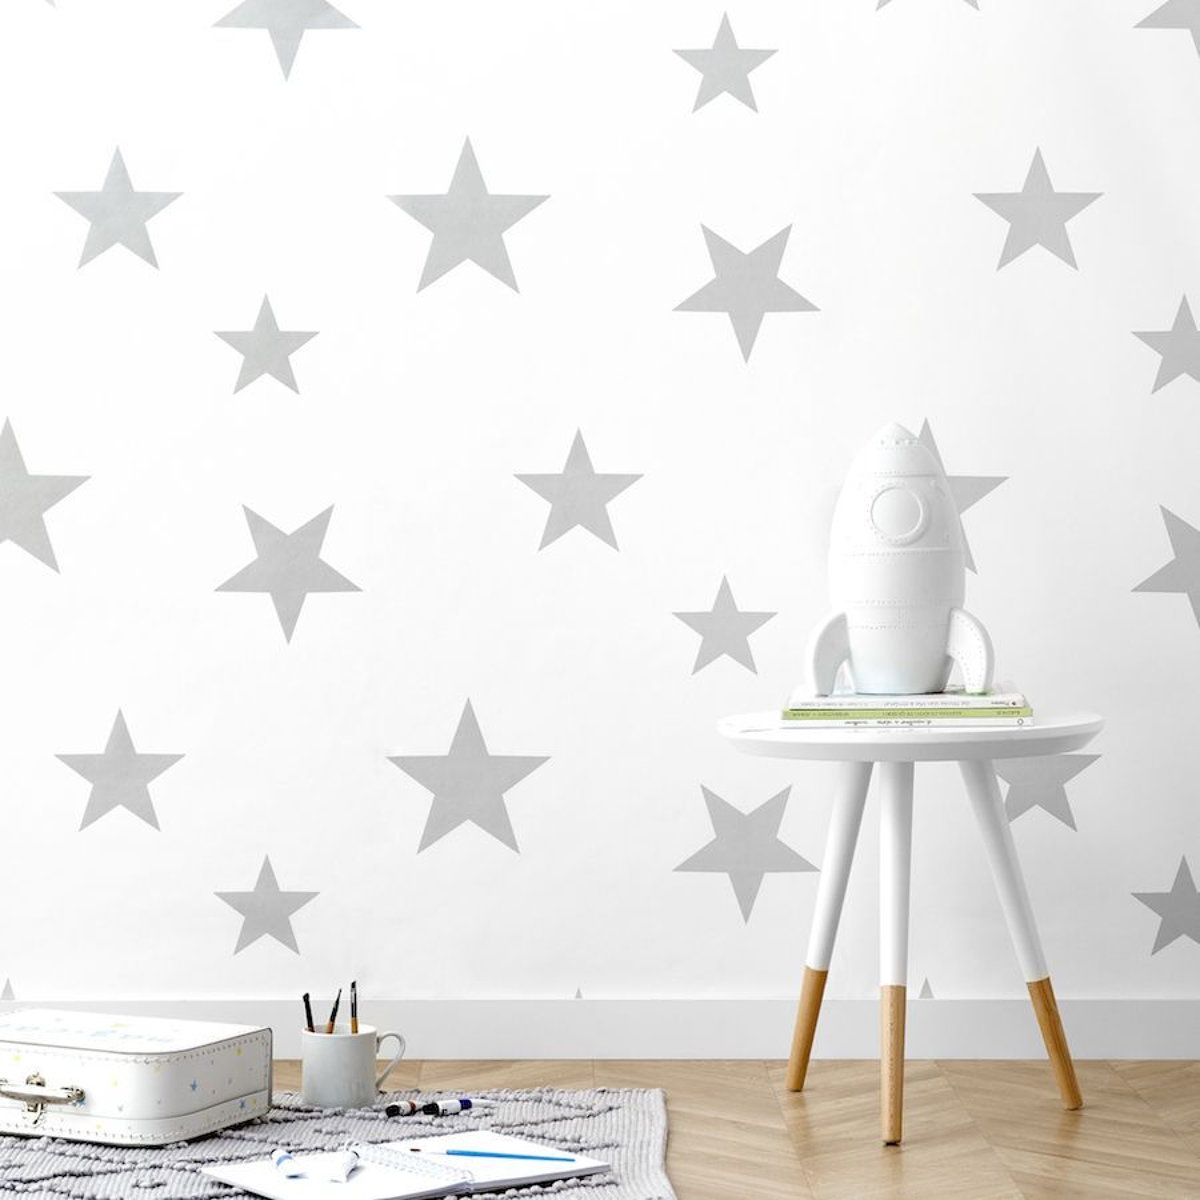 Stars wallpaper cinzento/branco